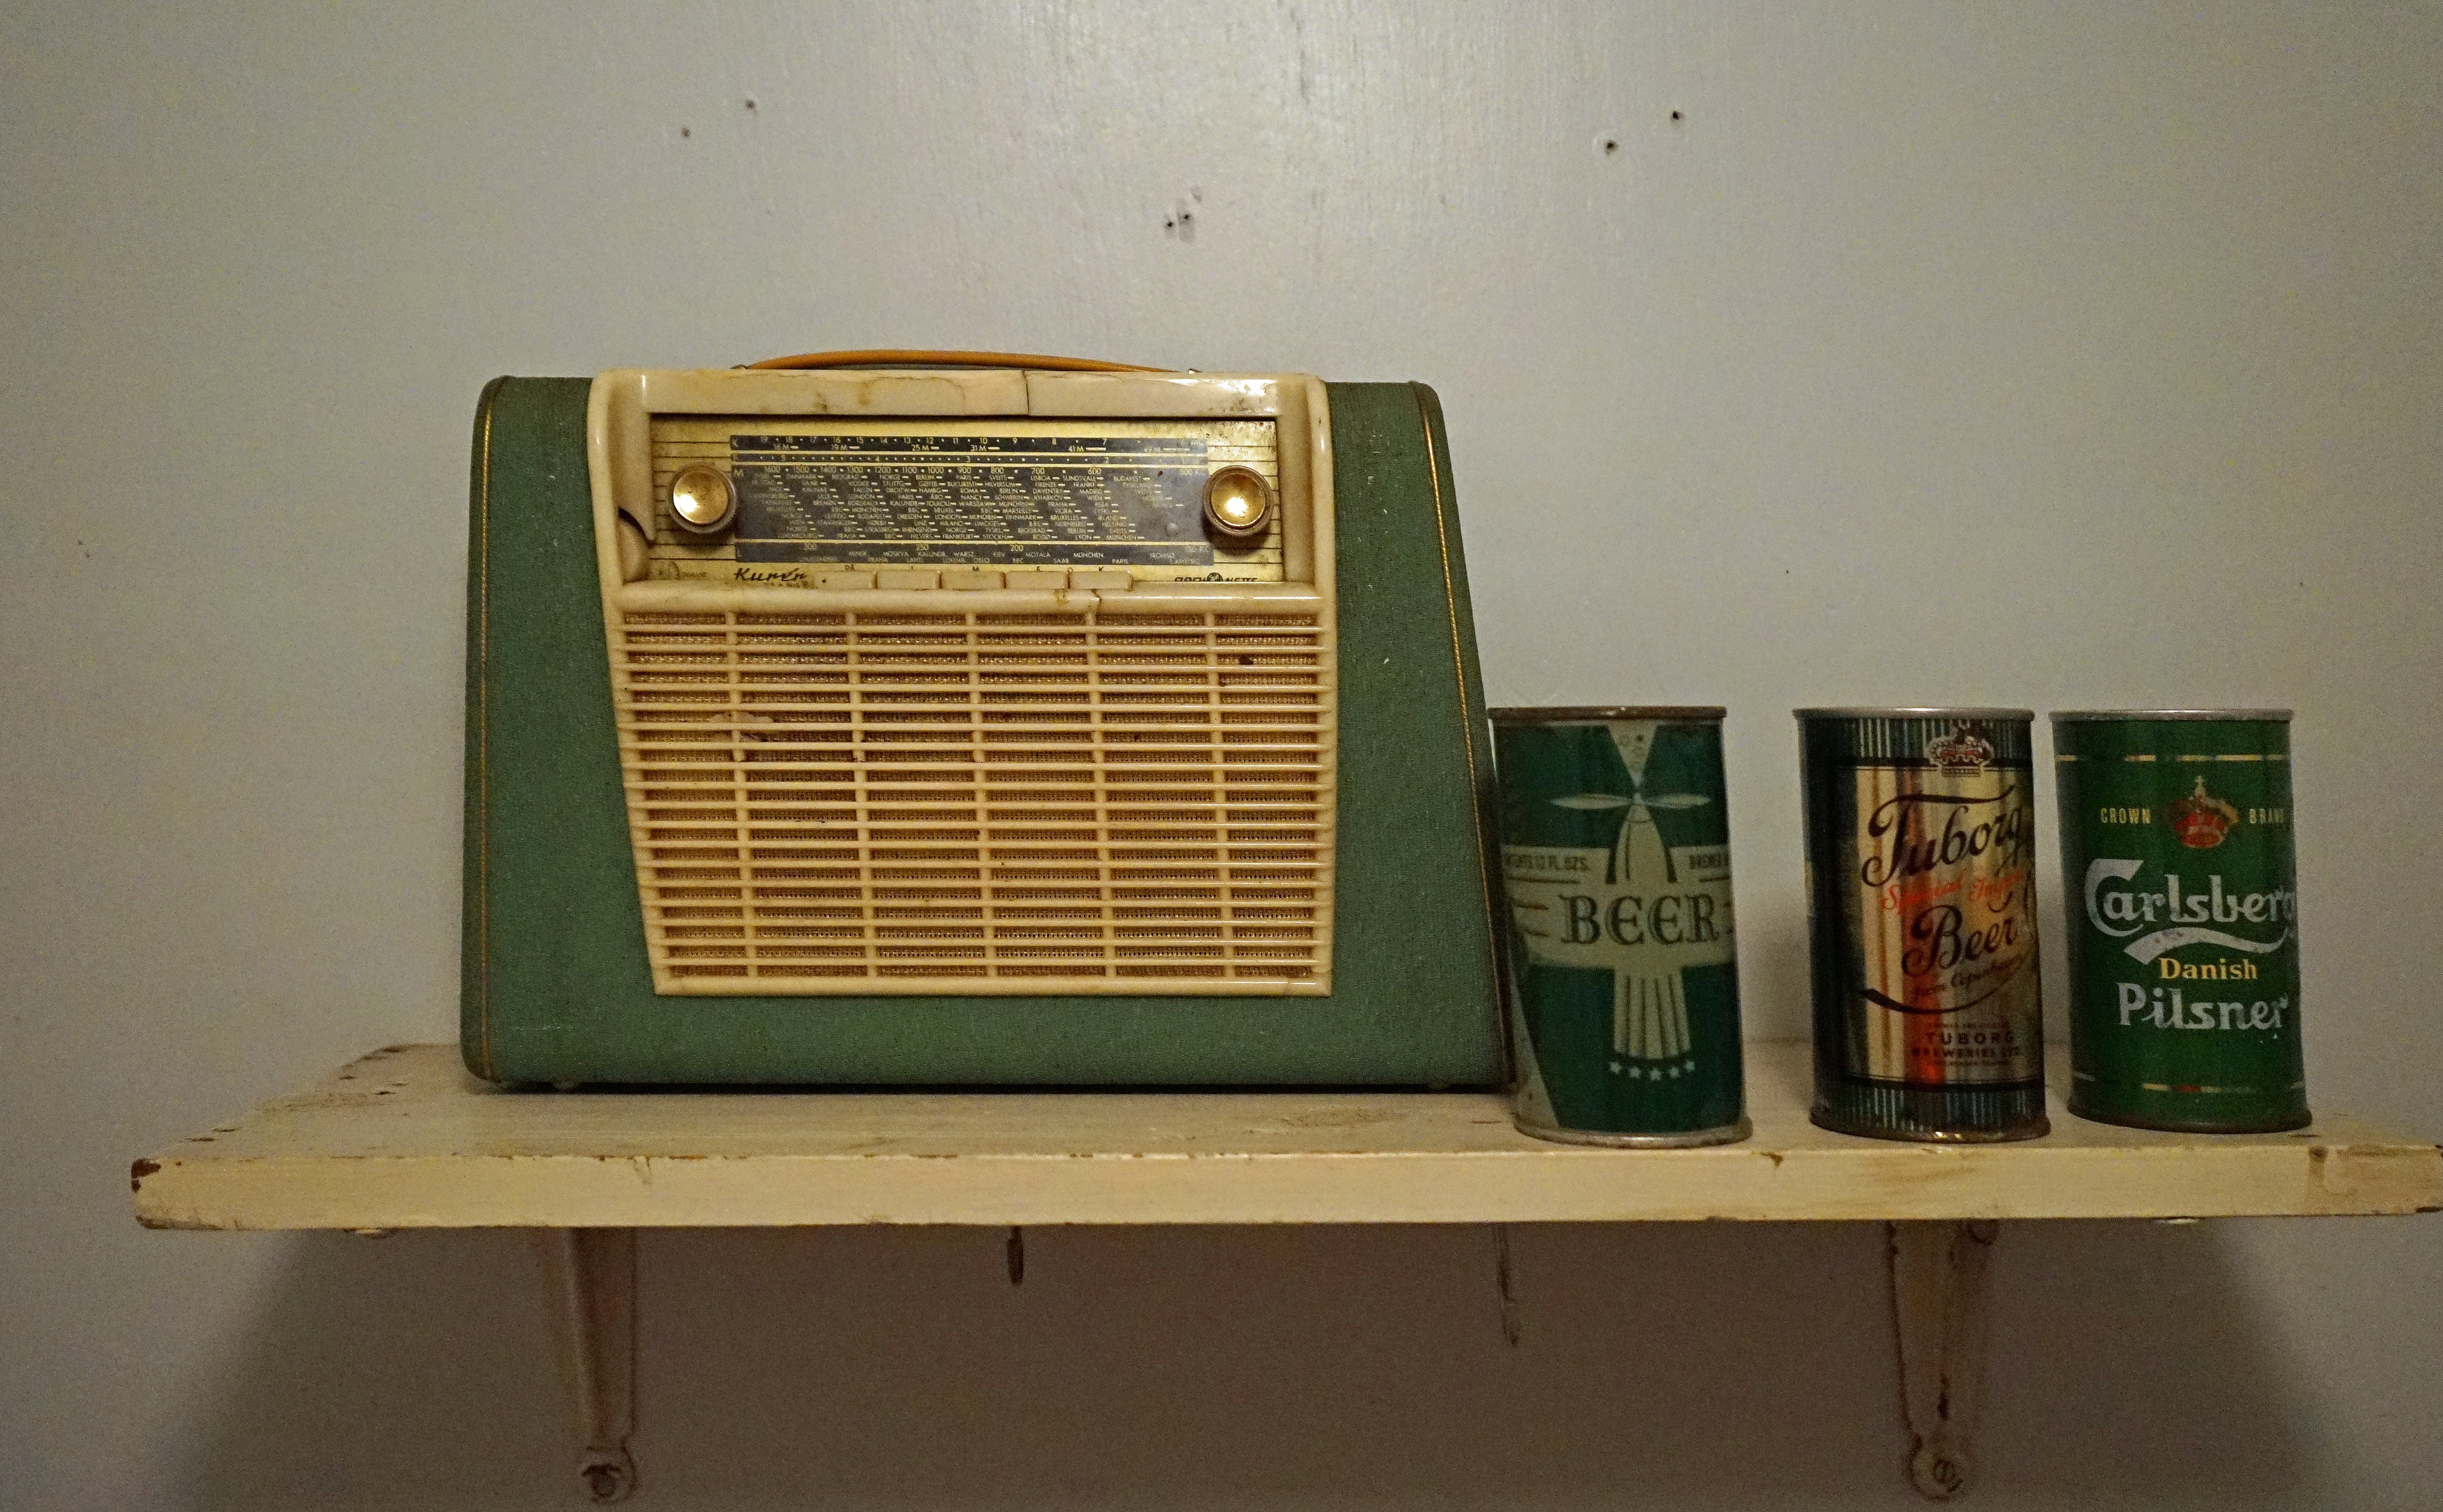 50S, Portable Radio, Radio, Music, retro styled, old-fashioned